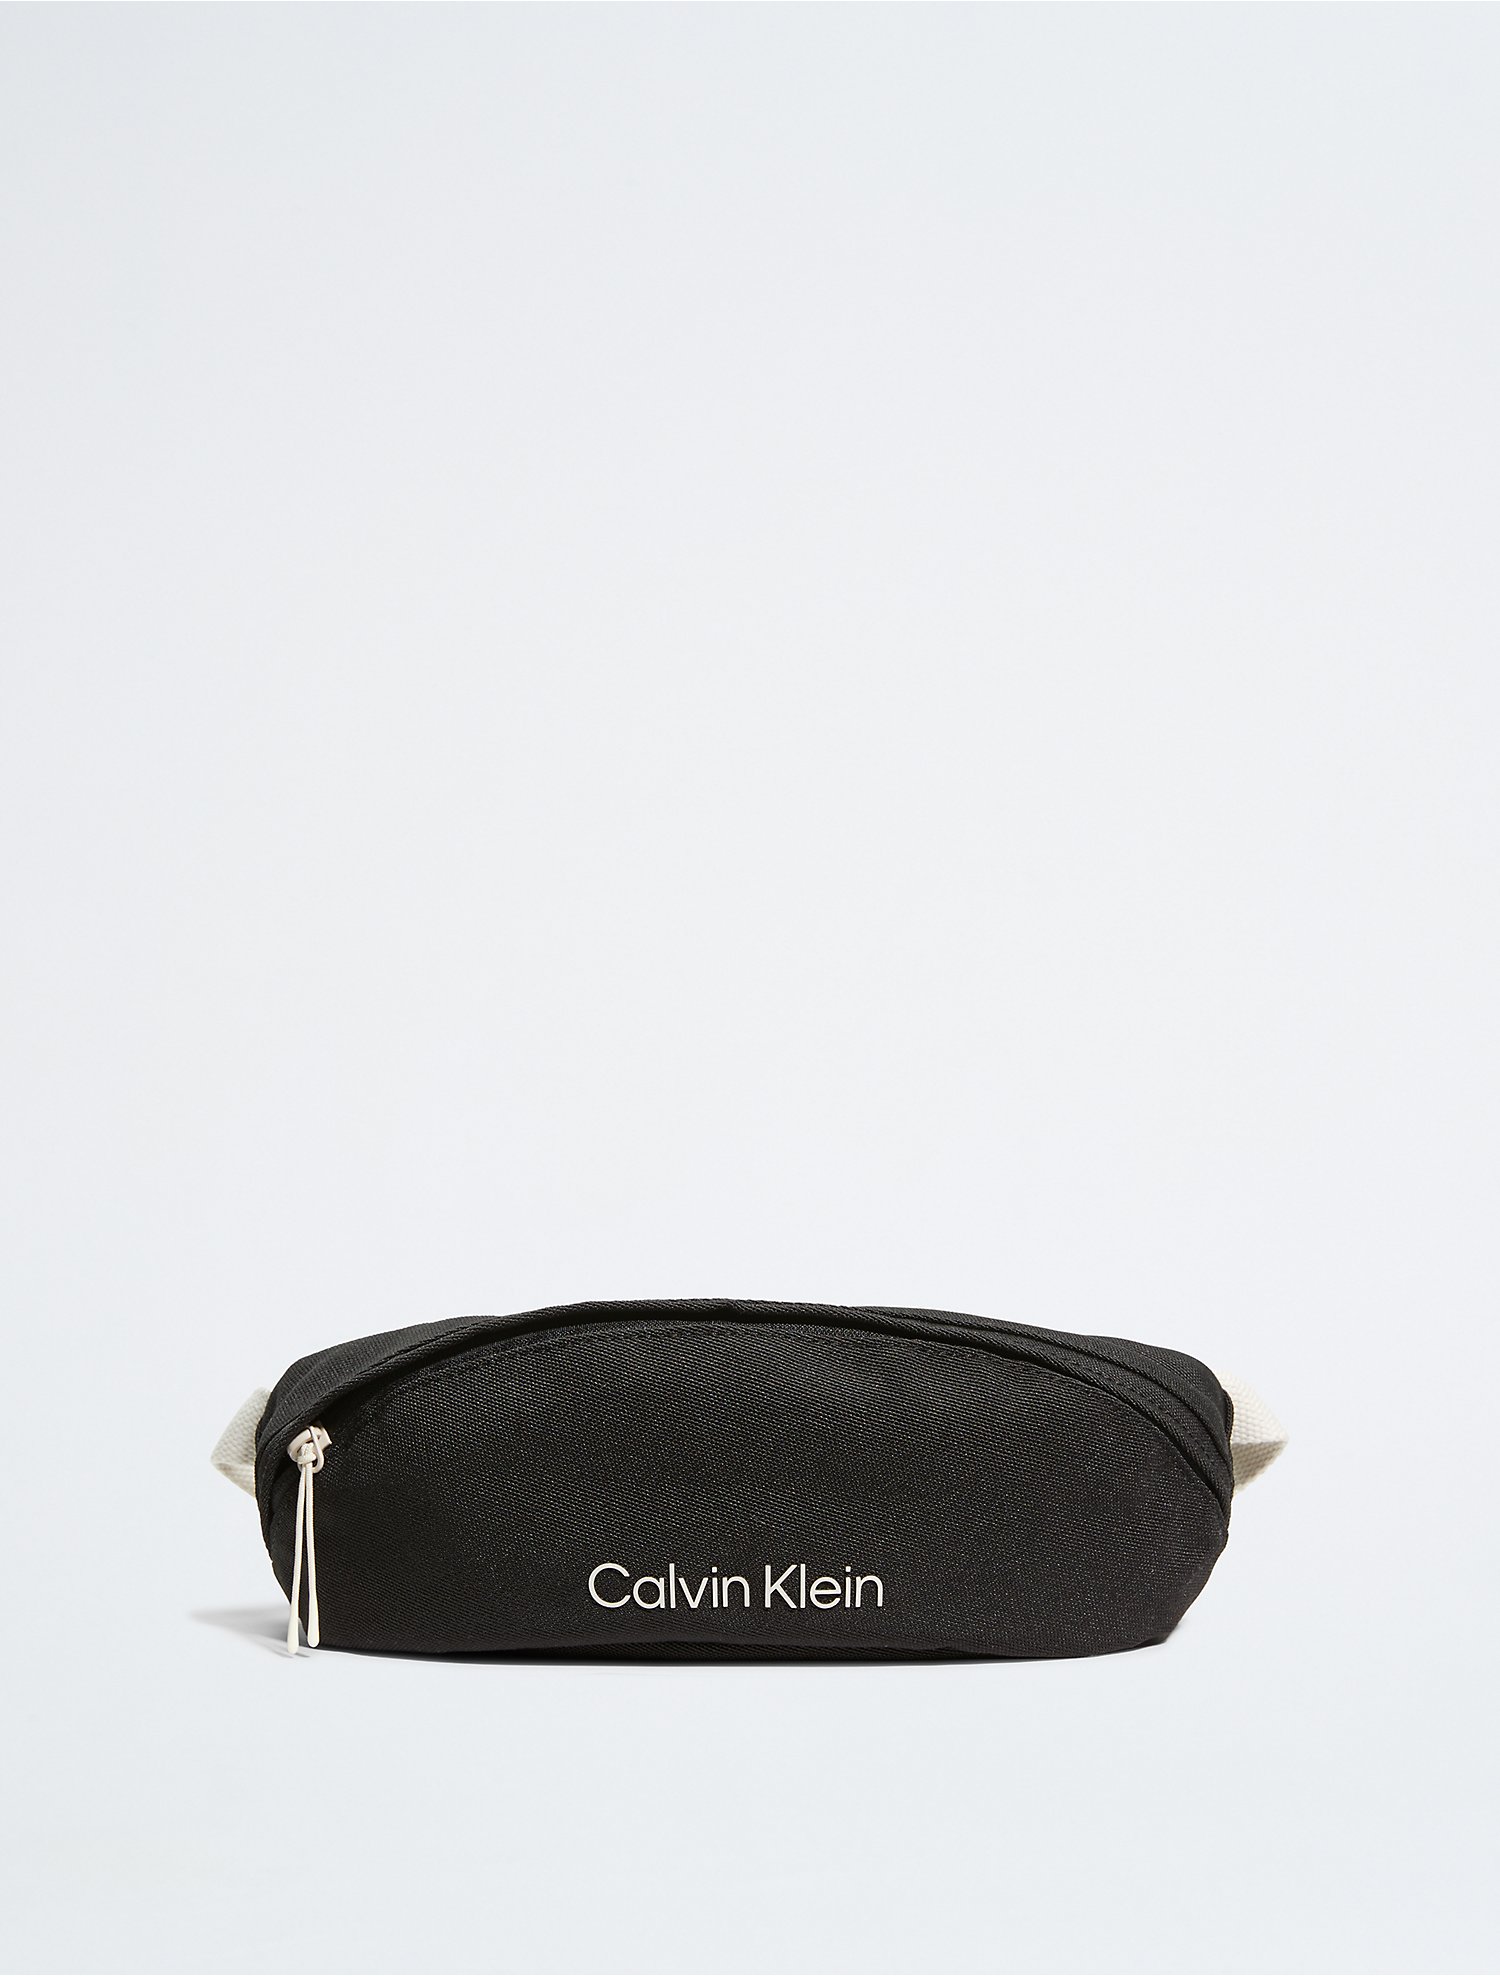 CK Sport Athletic Belt Bag | Calvin Klein